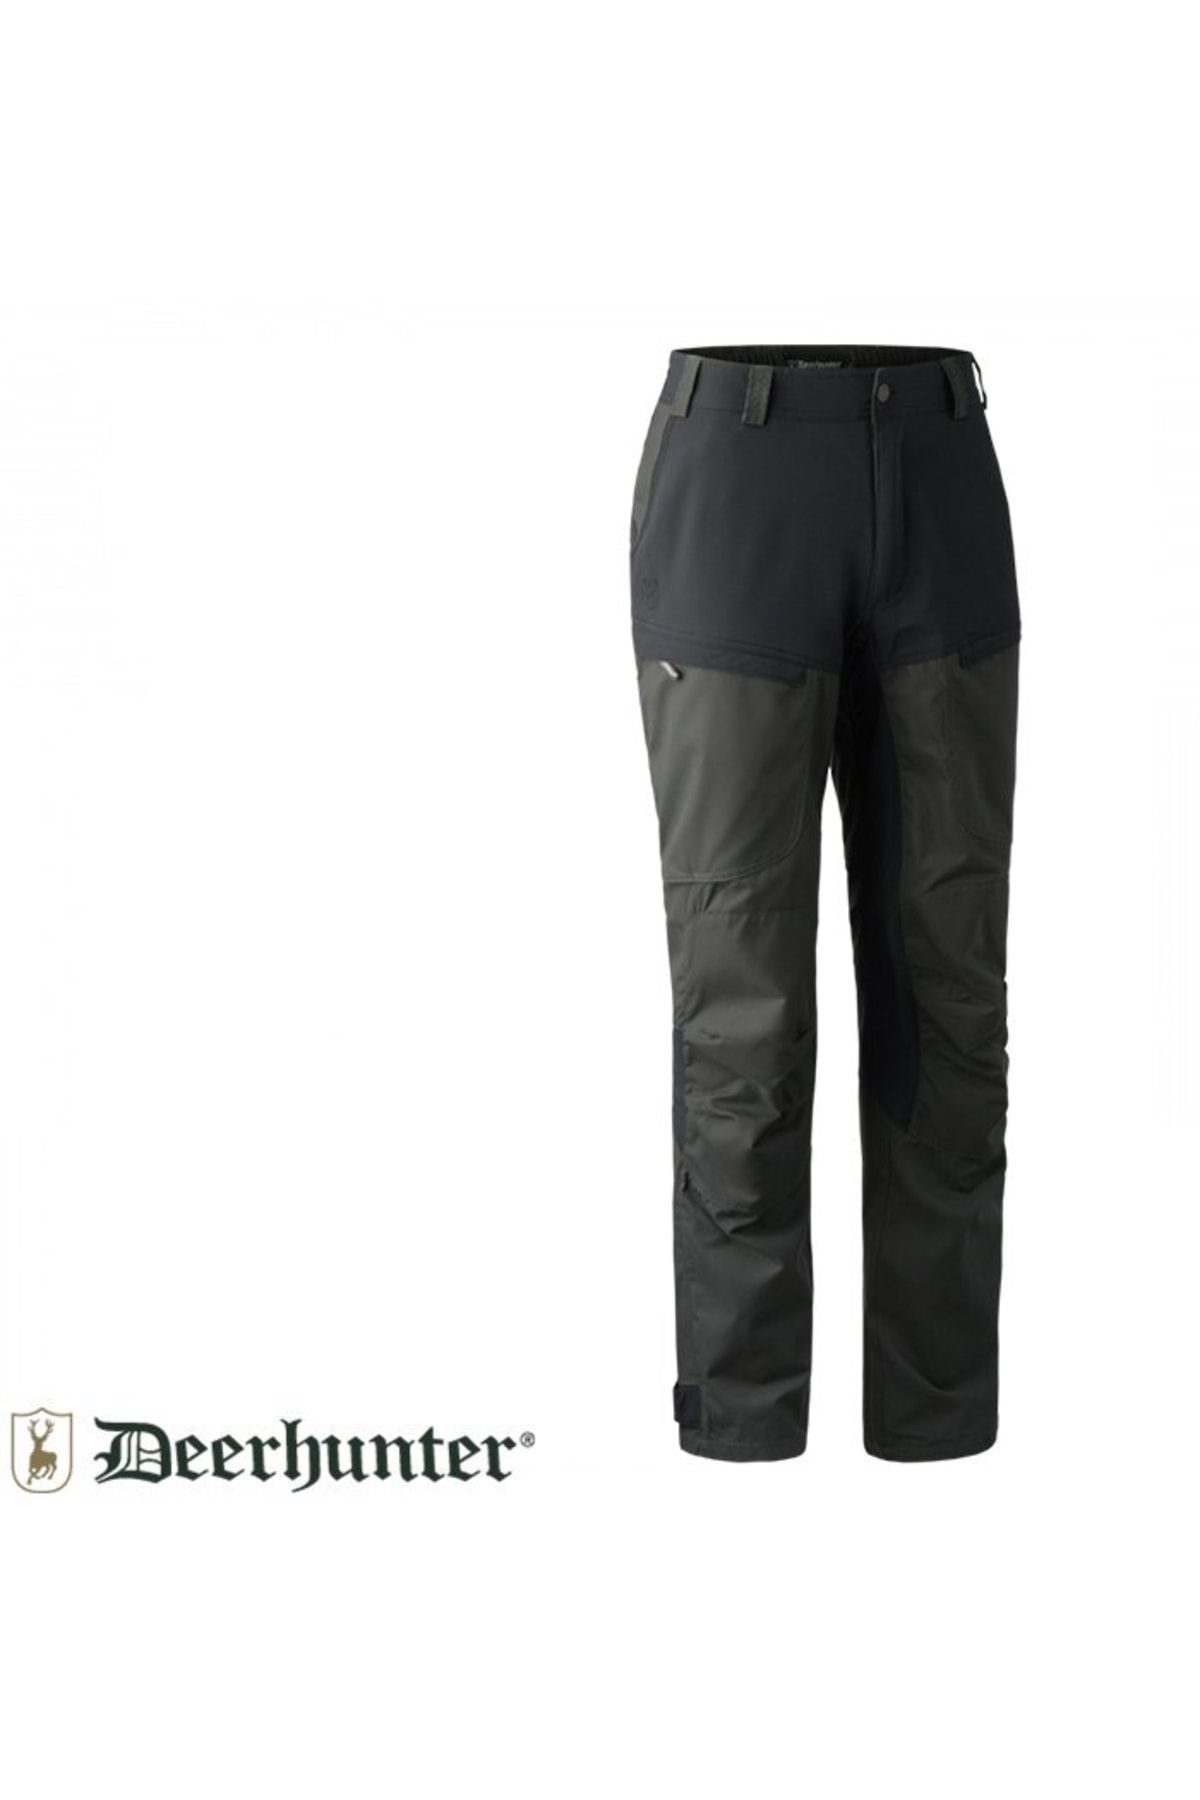 Deerhunter Strike Su Geçirmez Siyah Pantolon 46